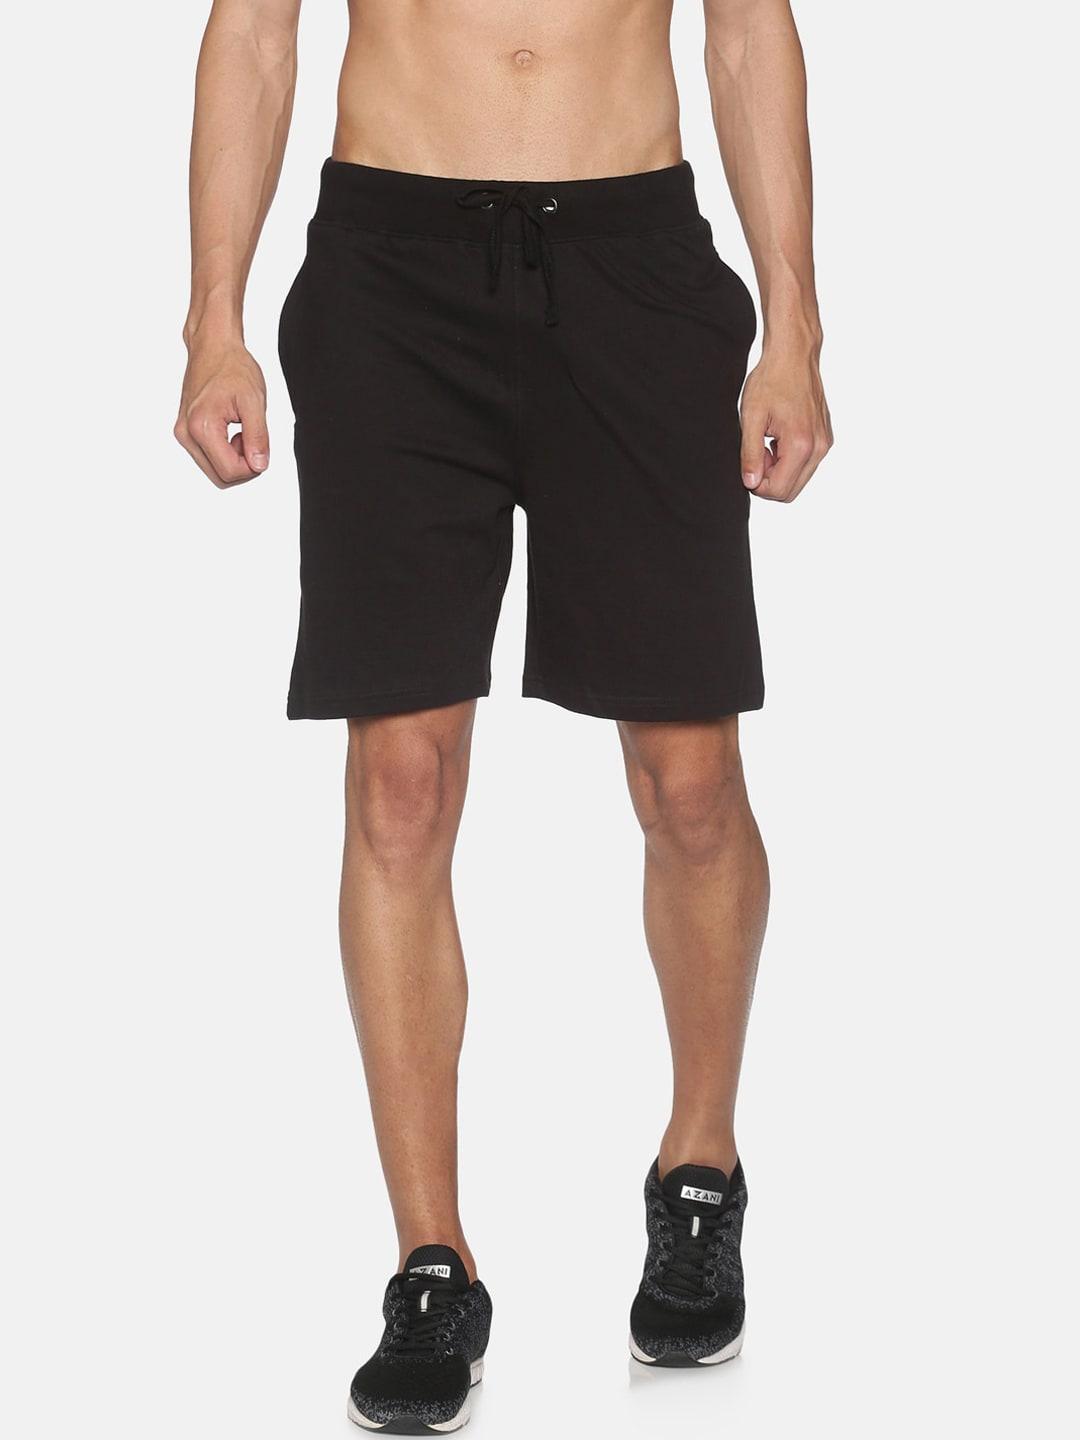 balista men black sports shorts